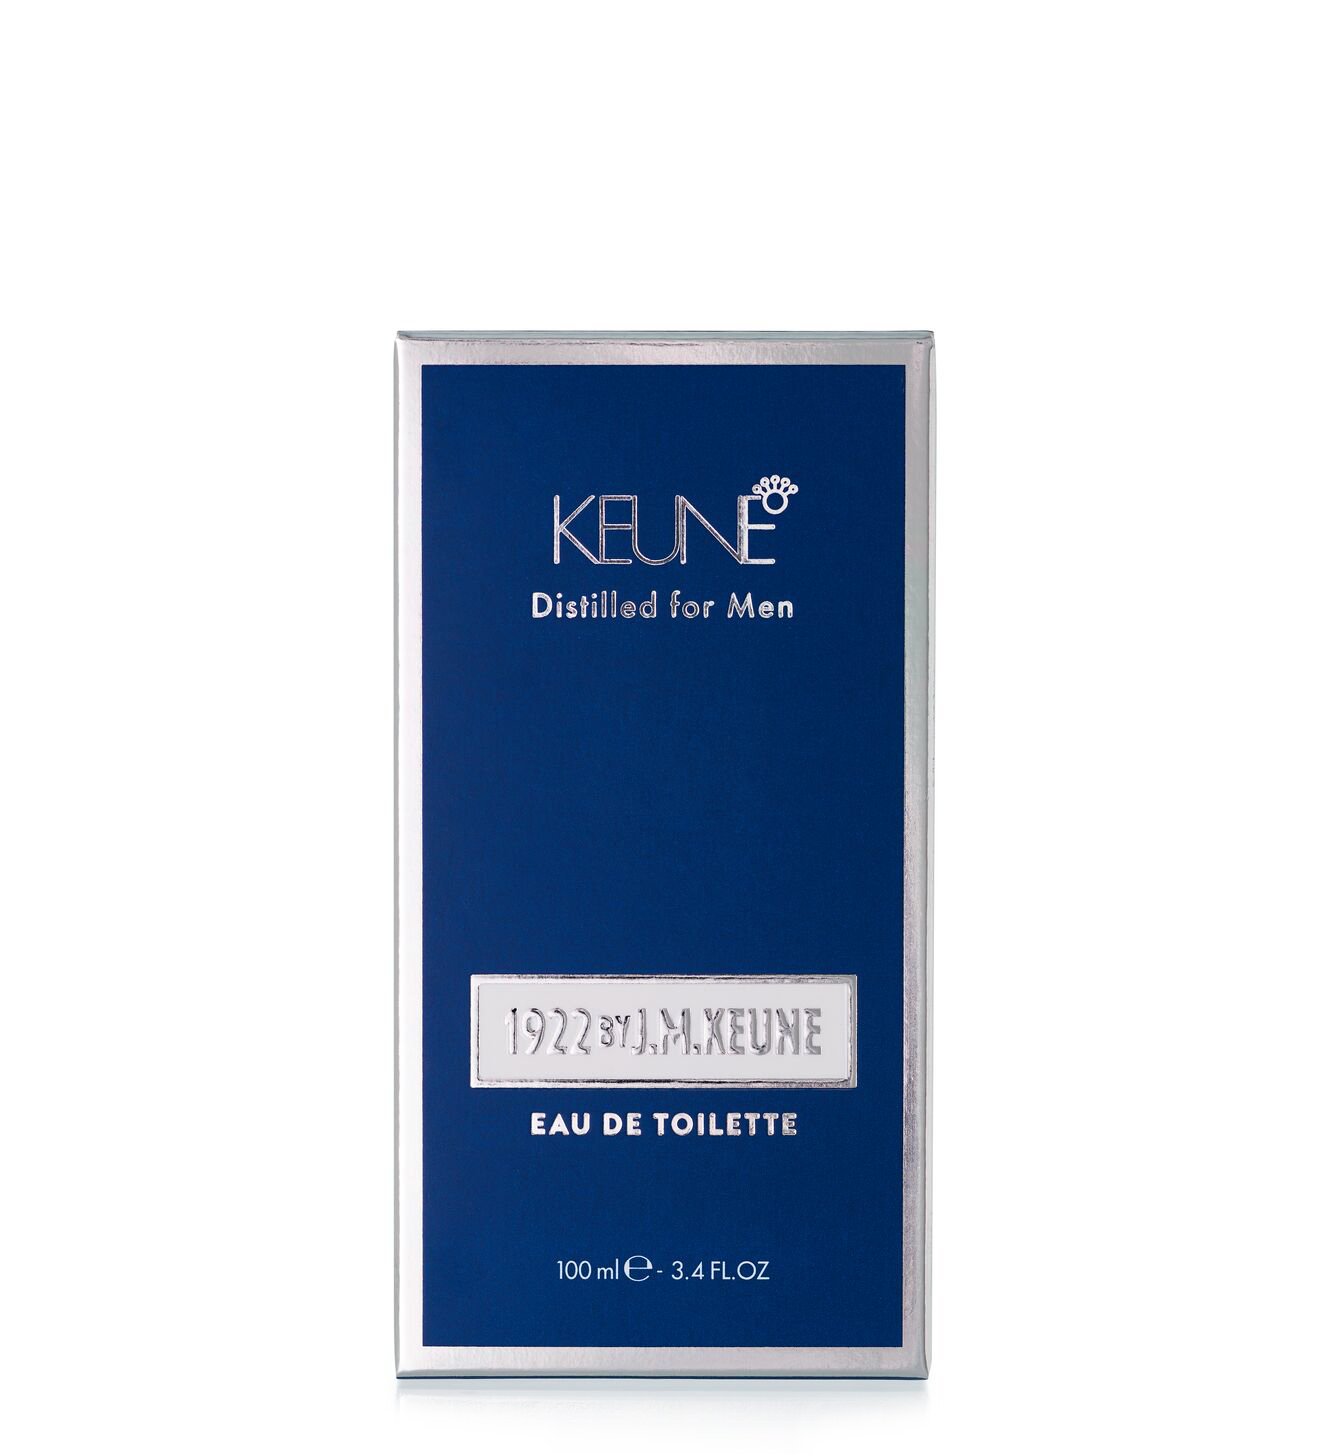 1922 by J.M. Keune presents Eau de Toilette, a masculine fragrance for the modern gentleman. Get the men's perfume on keune.ch.